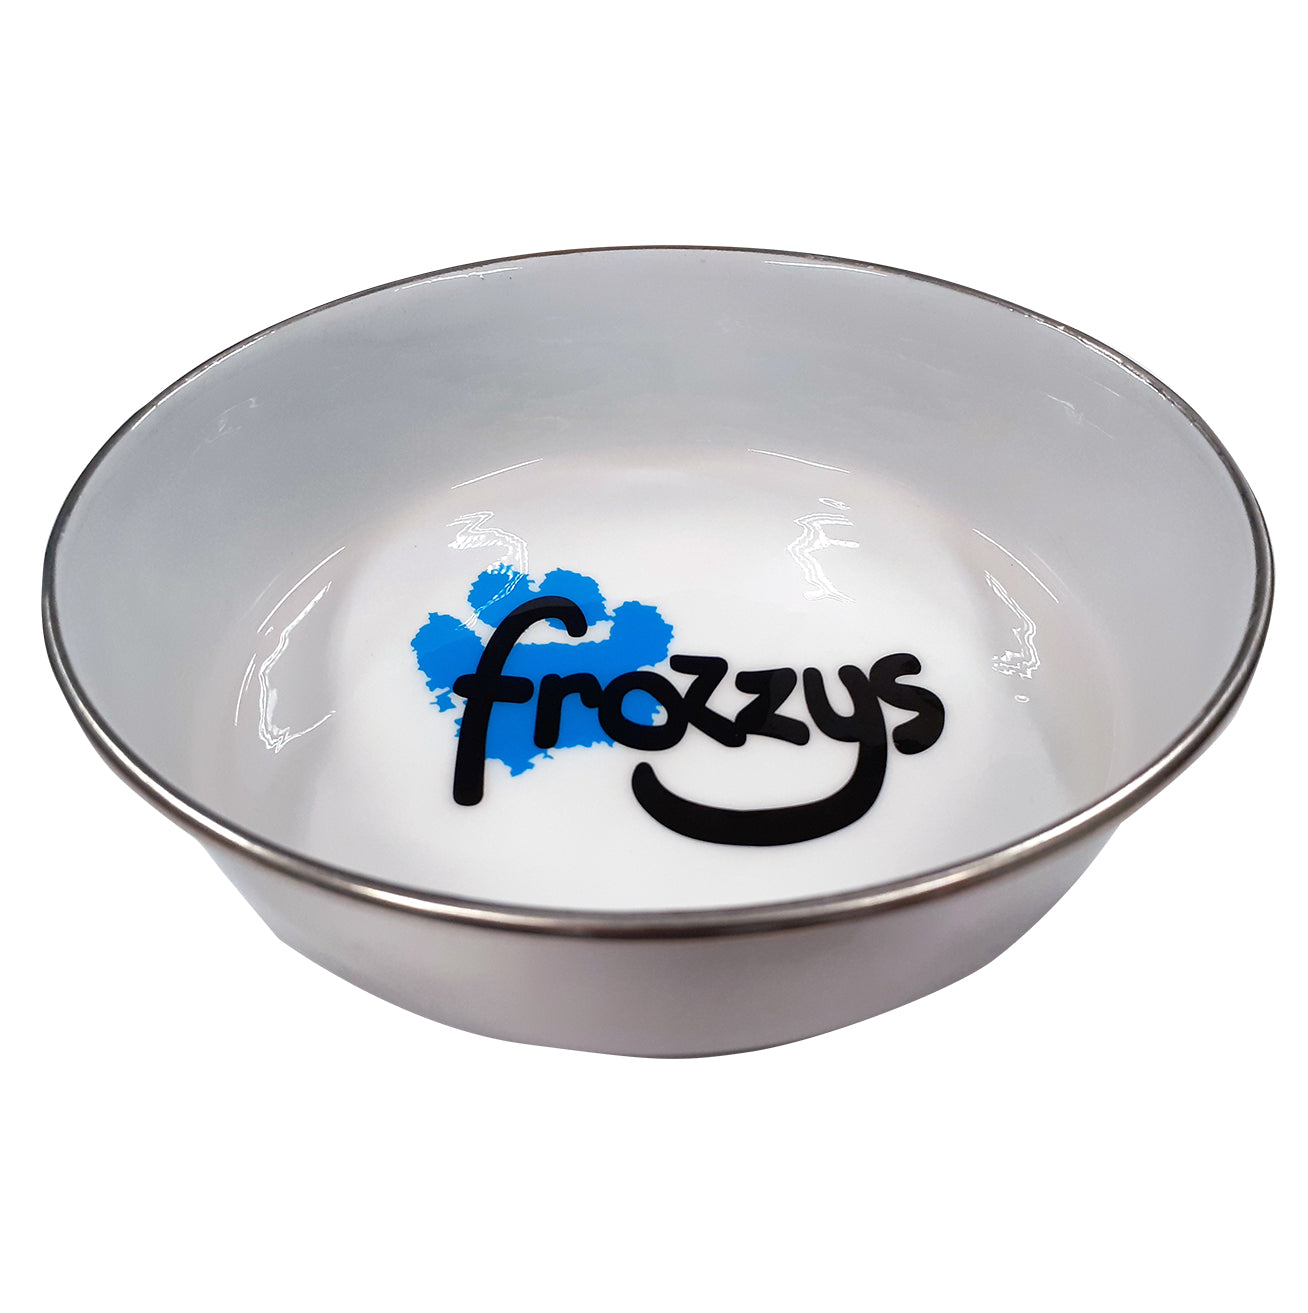 Frozzys Bowl